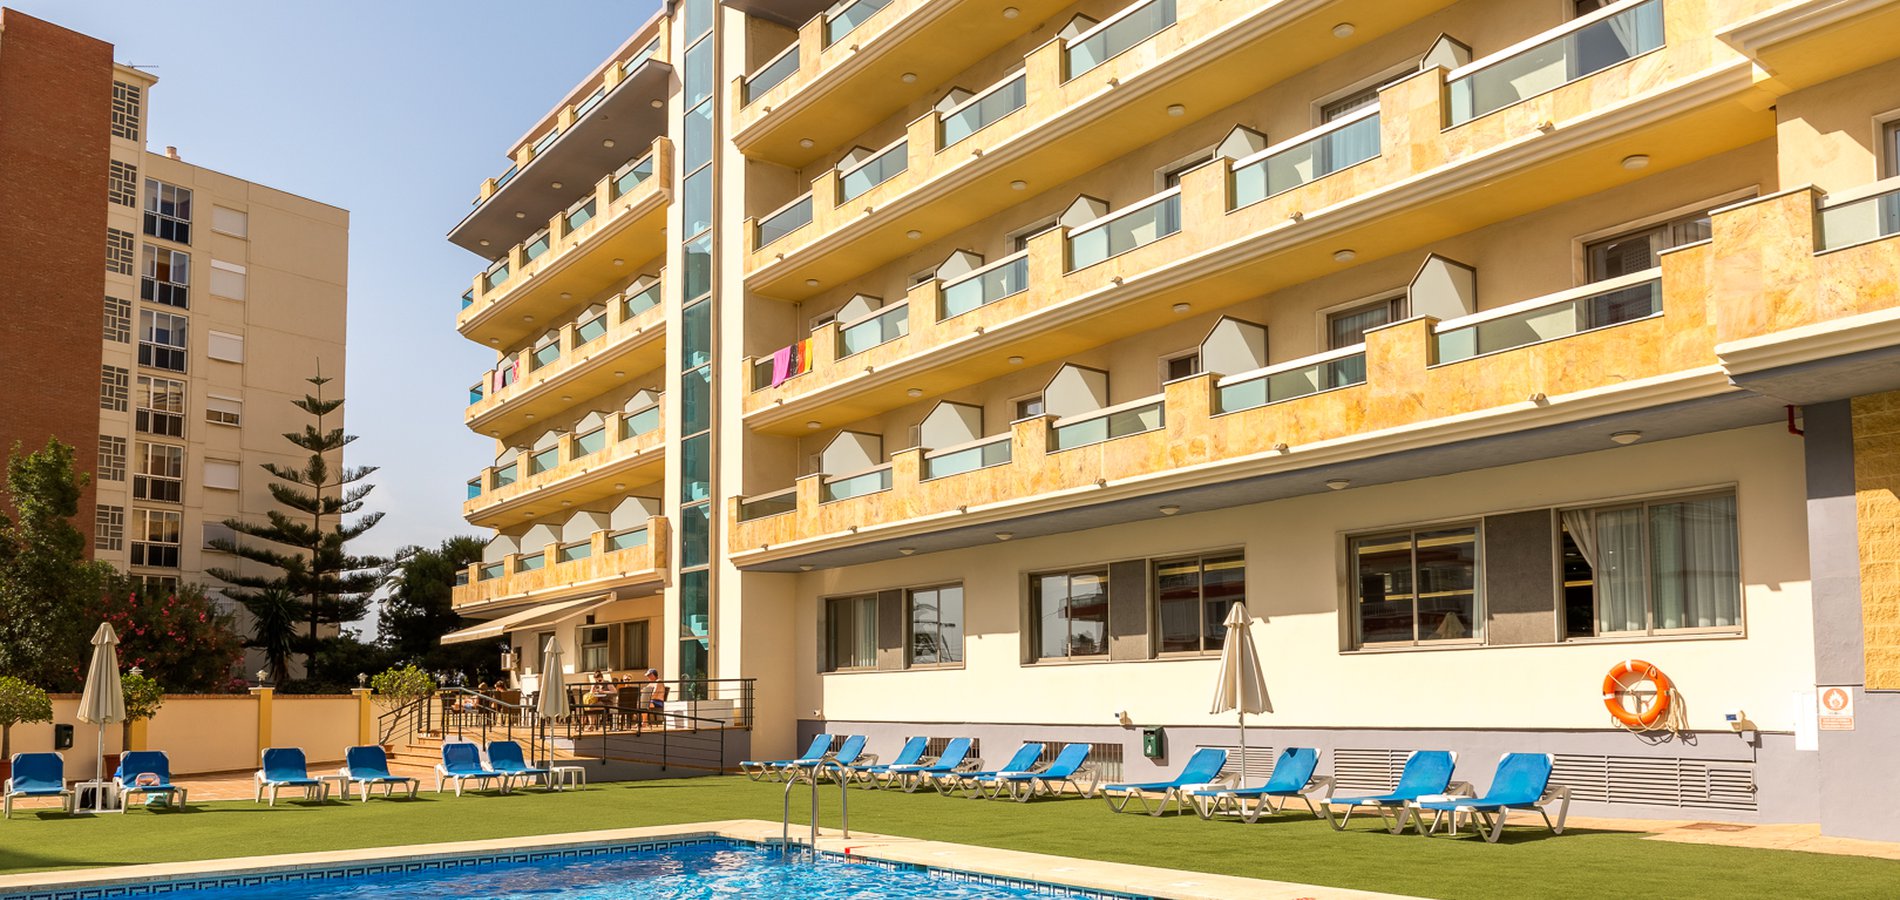  BQ Andalucía Beach Hotel Málaga - Torre del mar